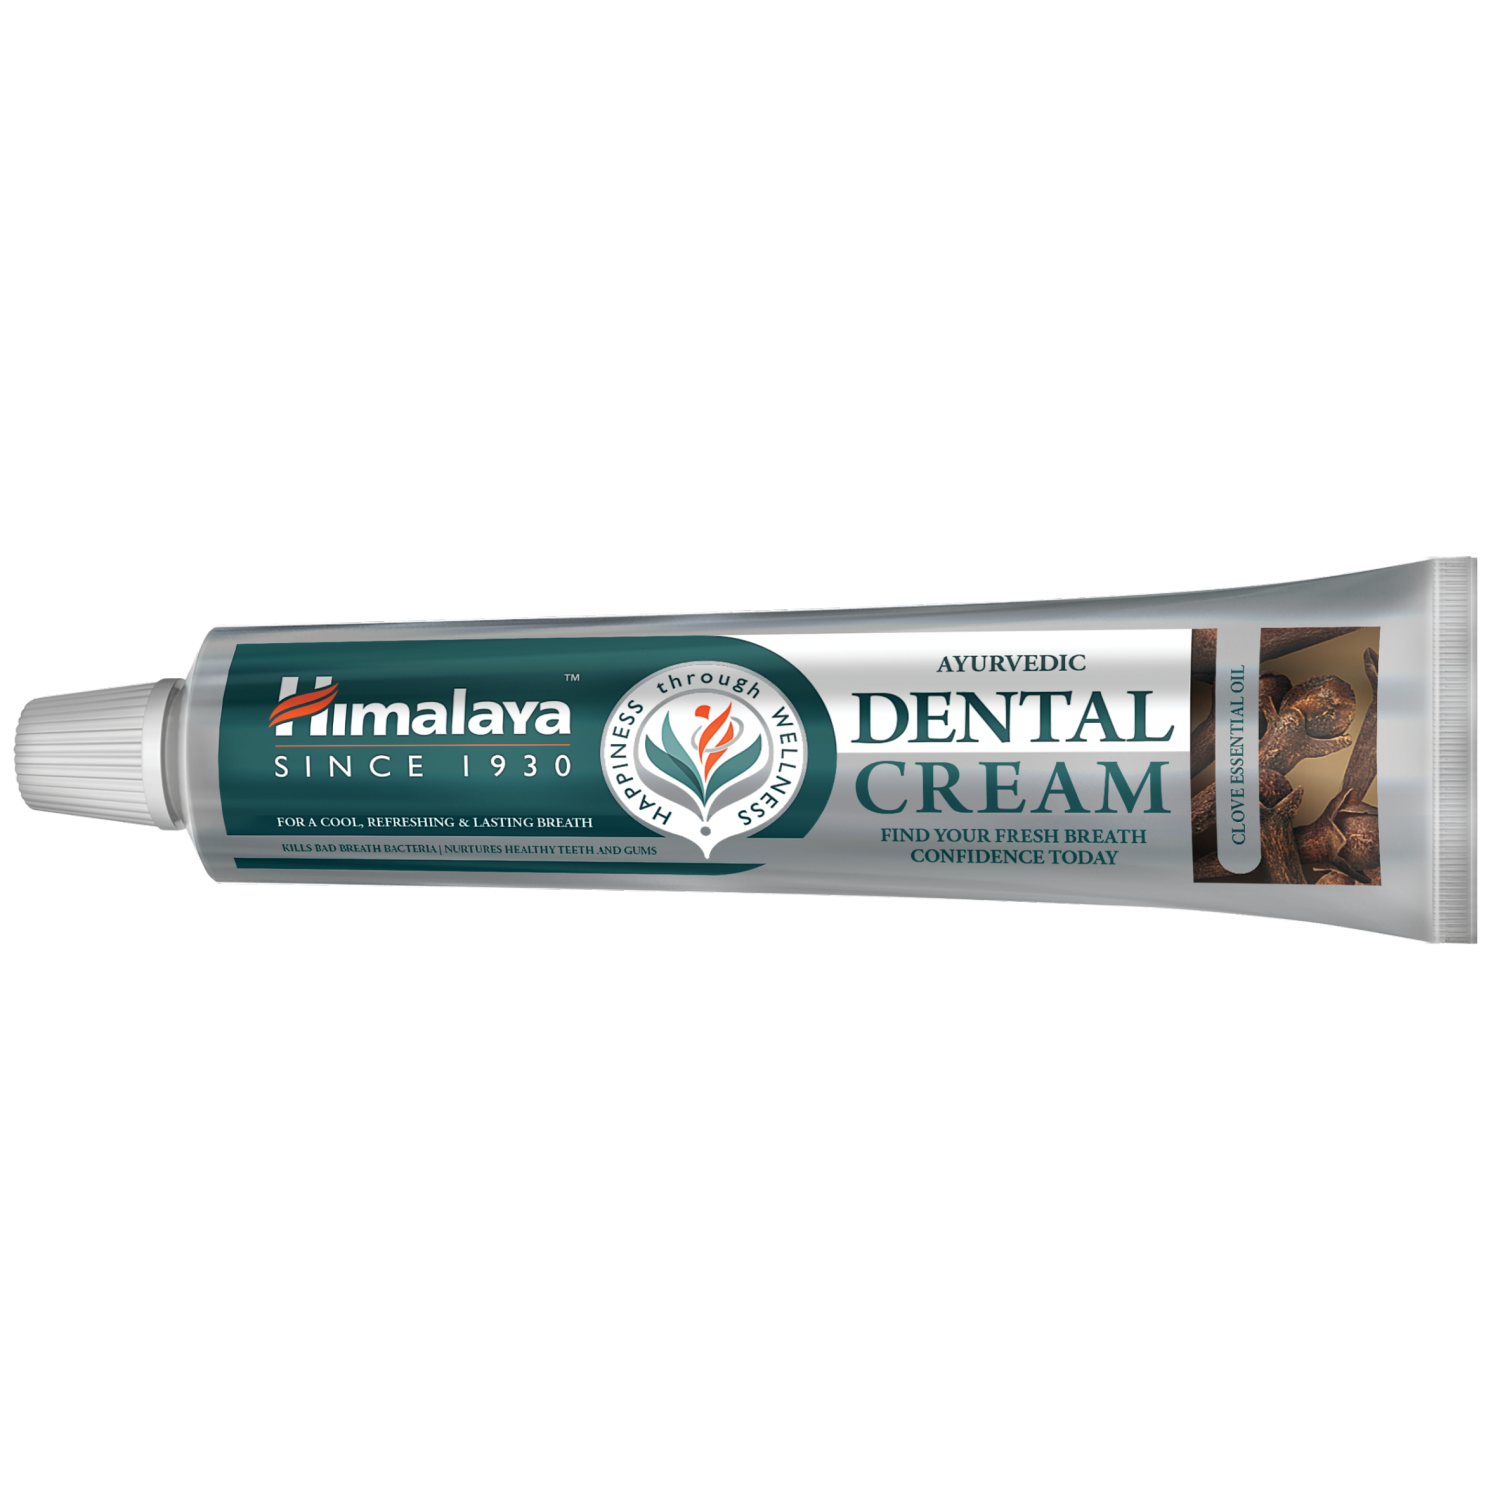 Himalaya Dental Cream